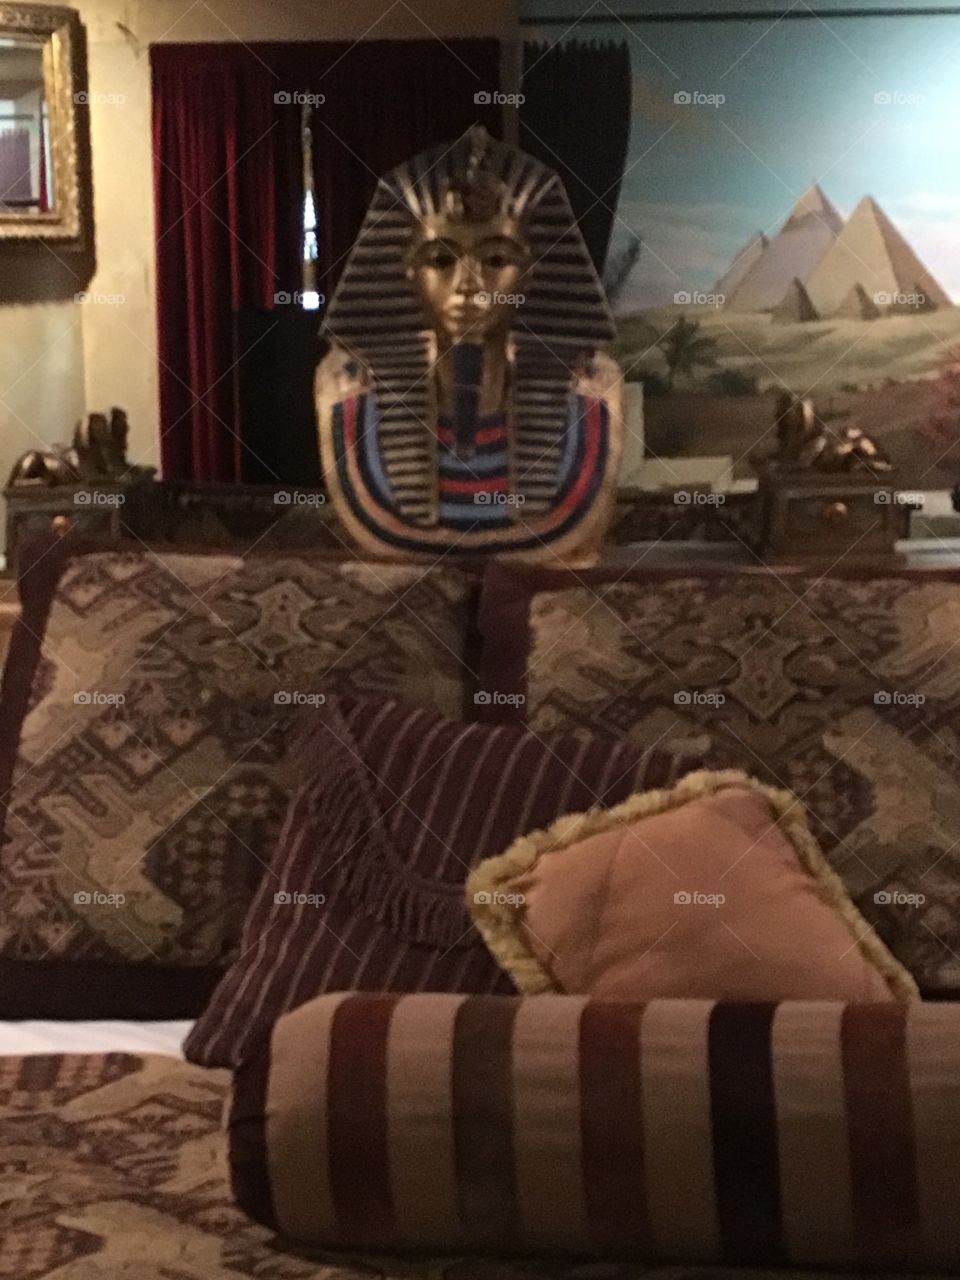 Elegant bed design in the Egyptian room at the Anniversary Inn in Logan, Utah.